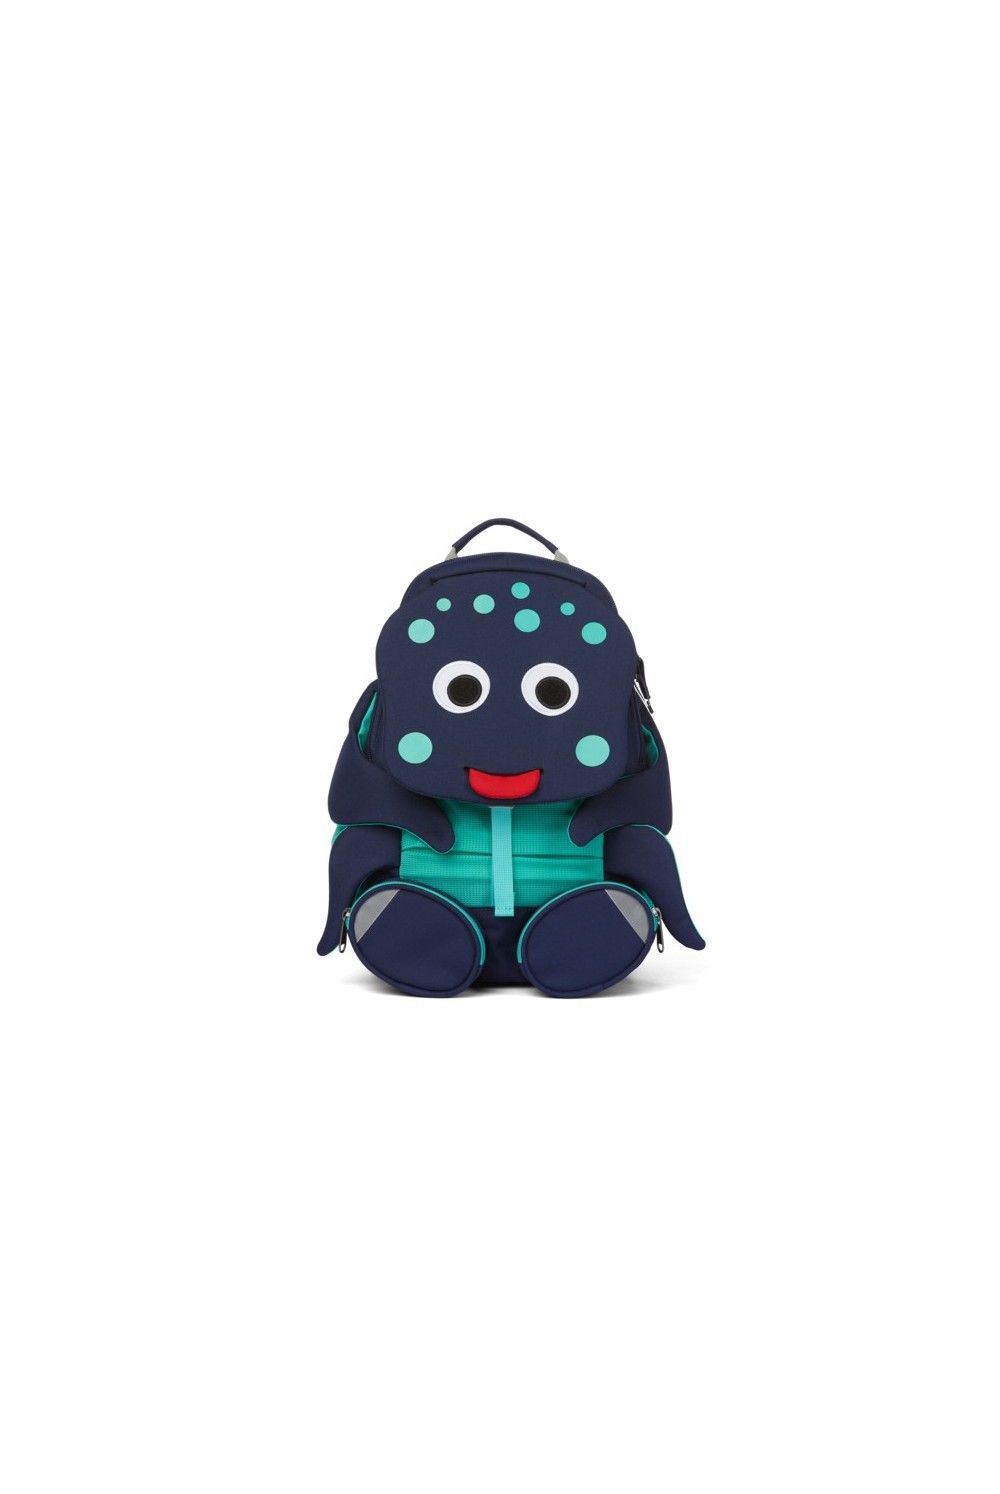 Children backpack Affenzahn big friend Octopus